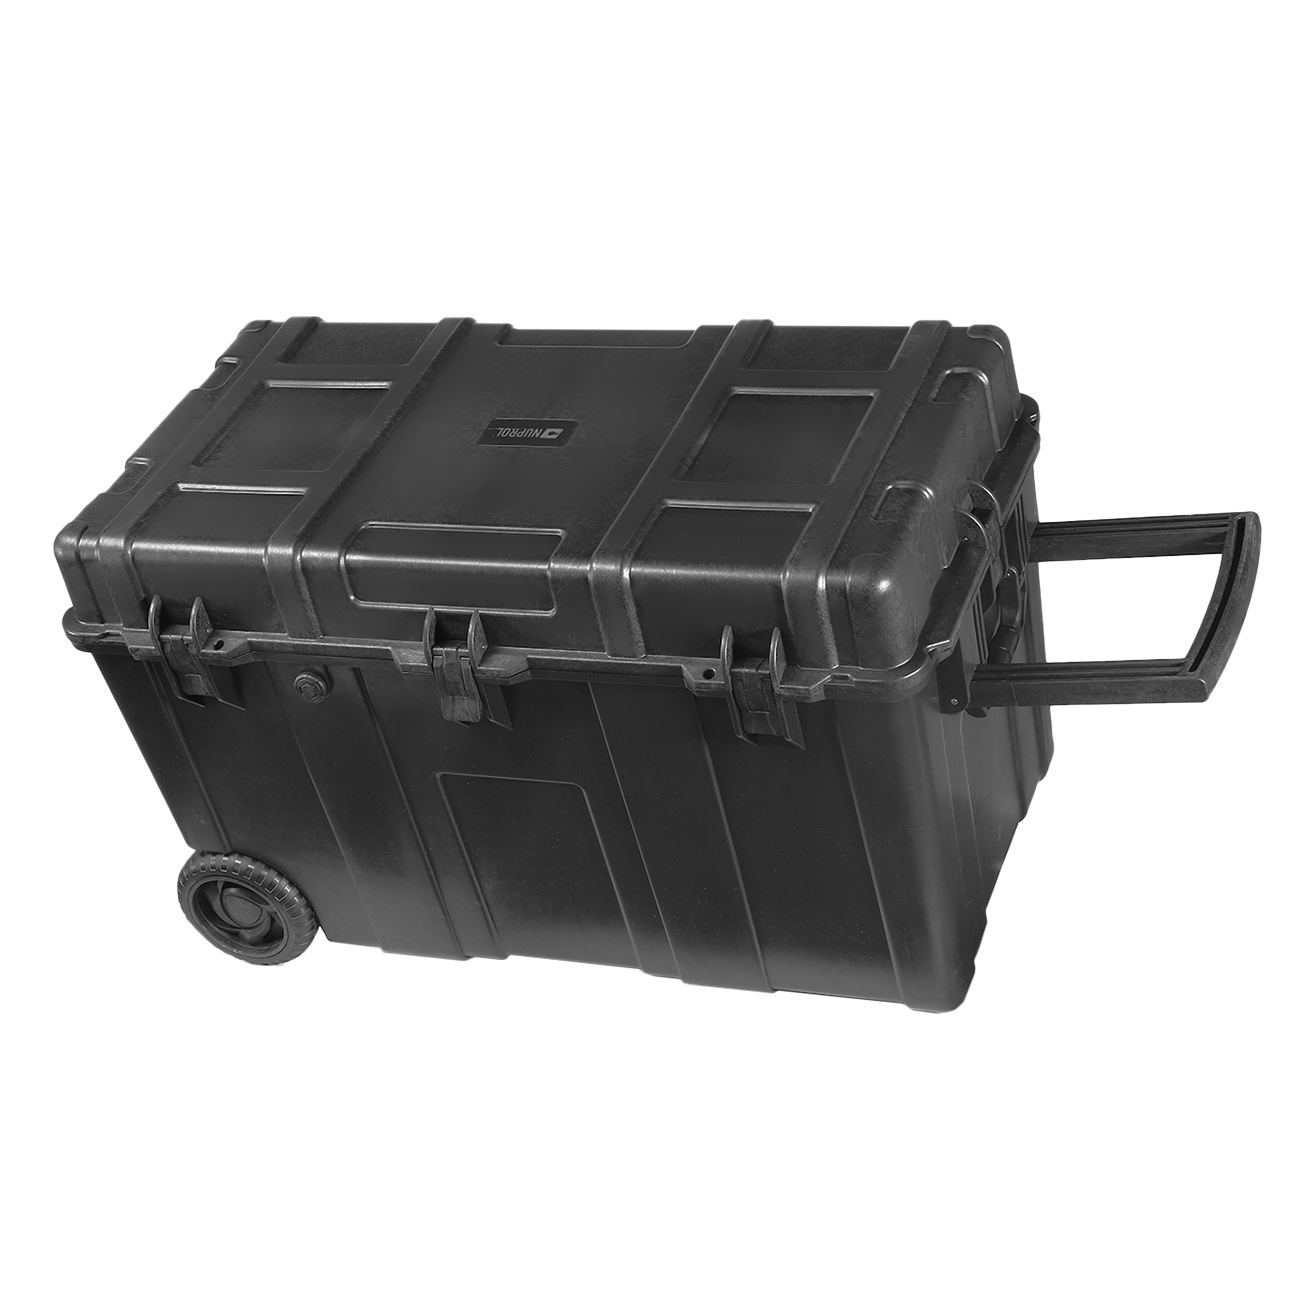 Nuprol Kit Box / Ultimate Hard Case Transport-Trolley 86 x 46 x 53 cm schwarz Bild 5